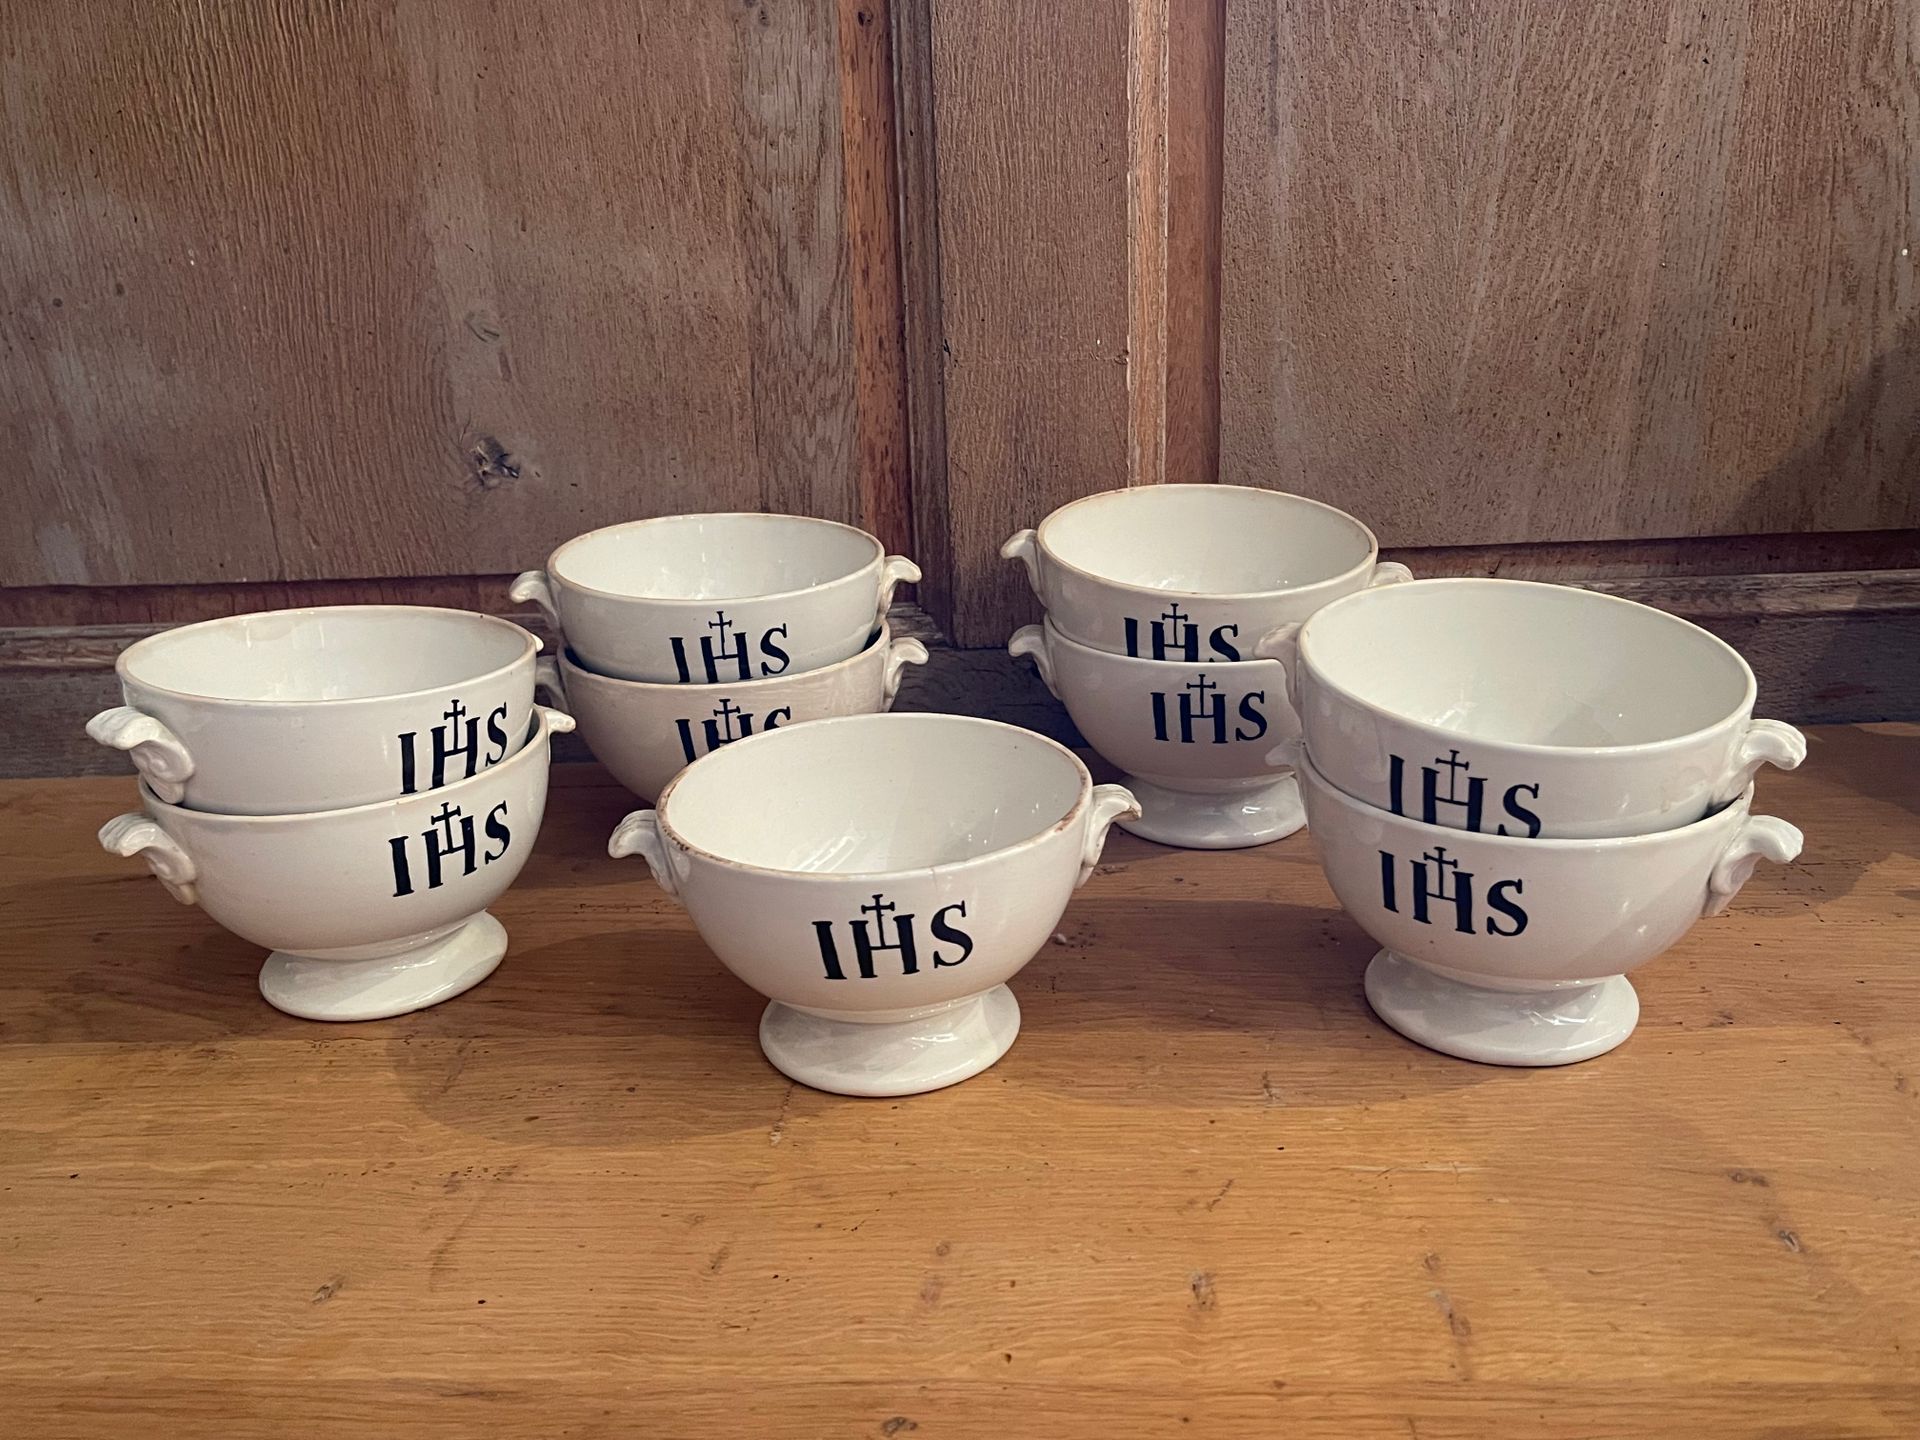 Null 九个白色陶器社区碗，上面刻有 "IHS "字样。